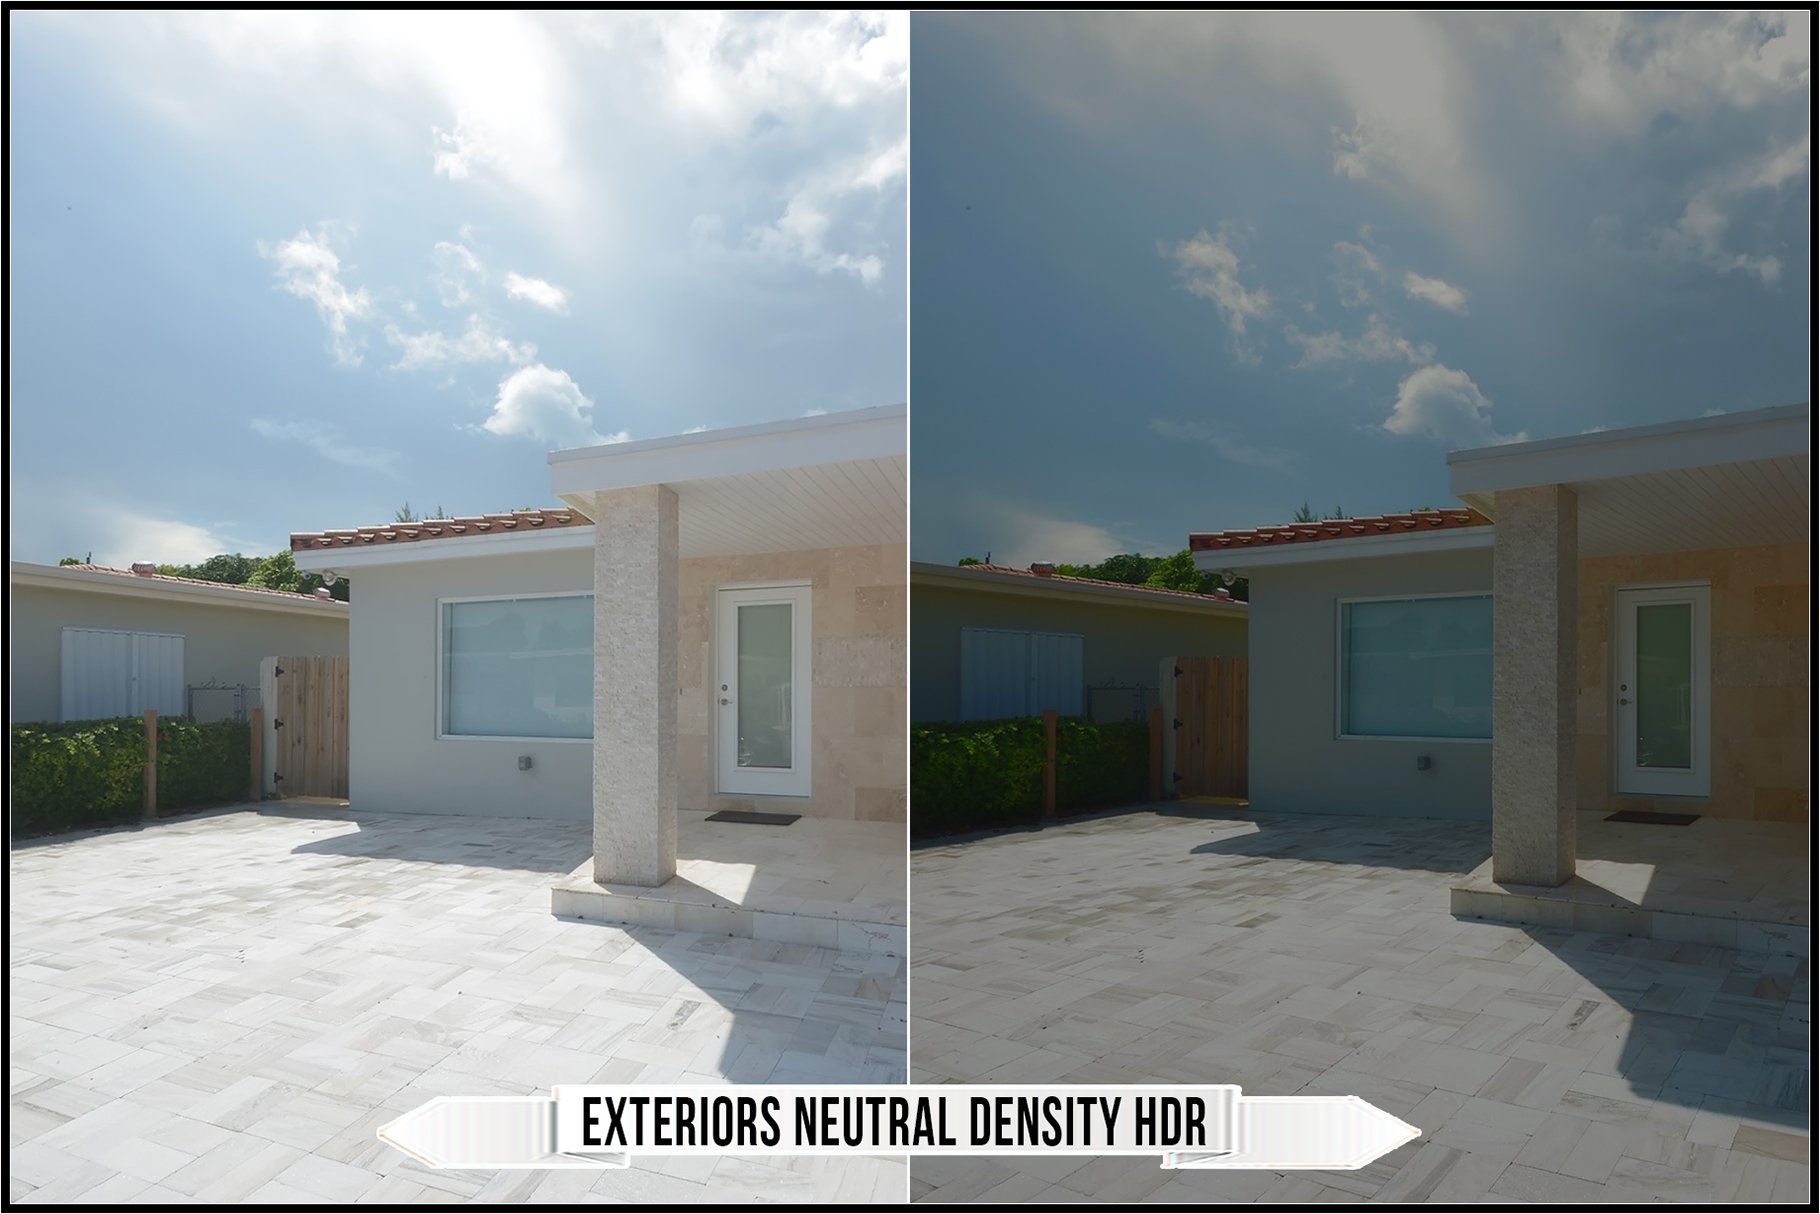 exteriors neutral density hdr 711